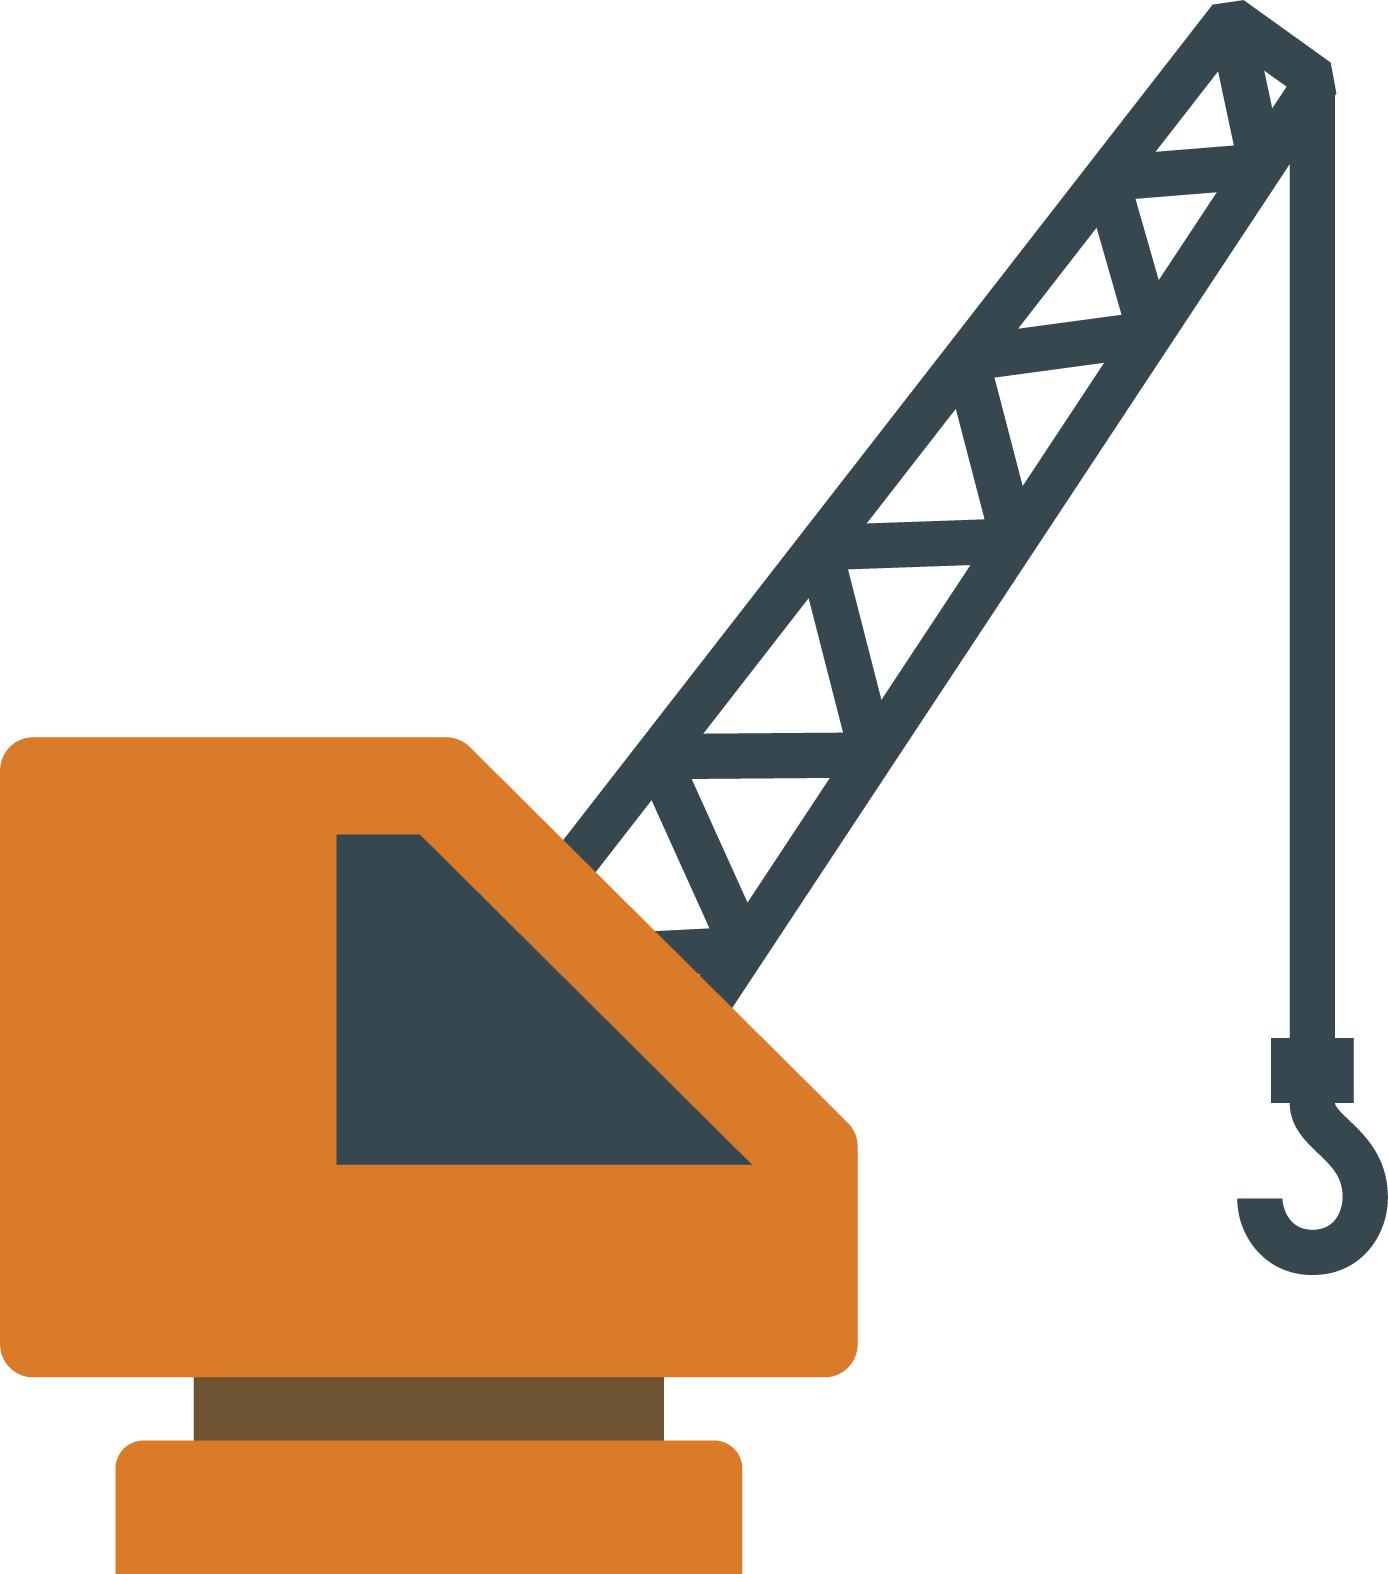 An animated orange construction crane icon.